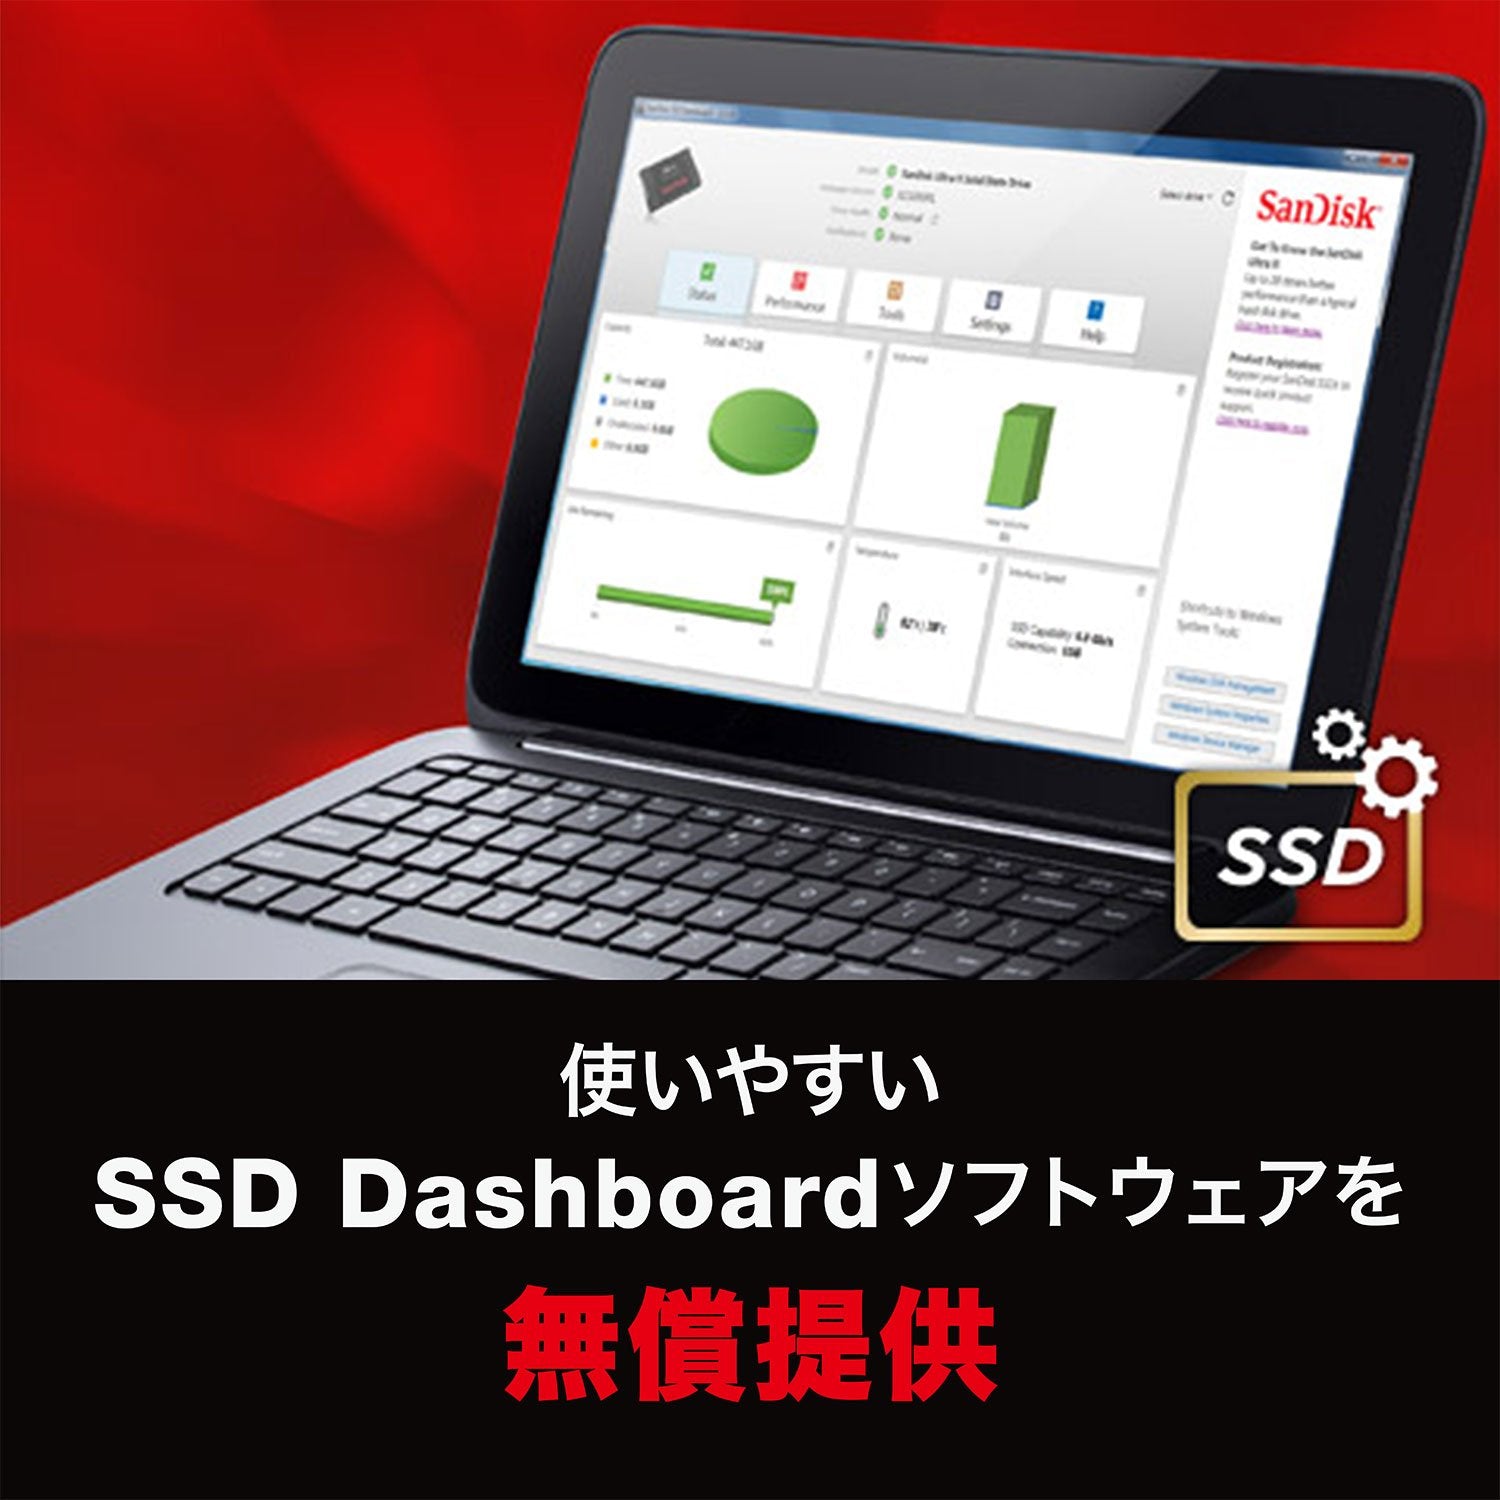 SanDisk Ultra II mSATA 512GB Solid State Drive 2-Inch SDMSATA-512G-G25